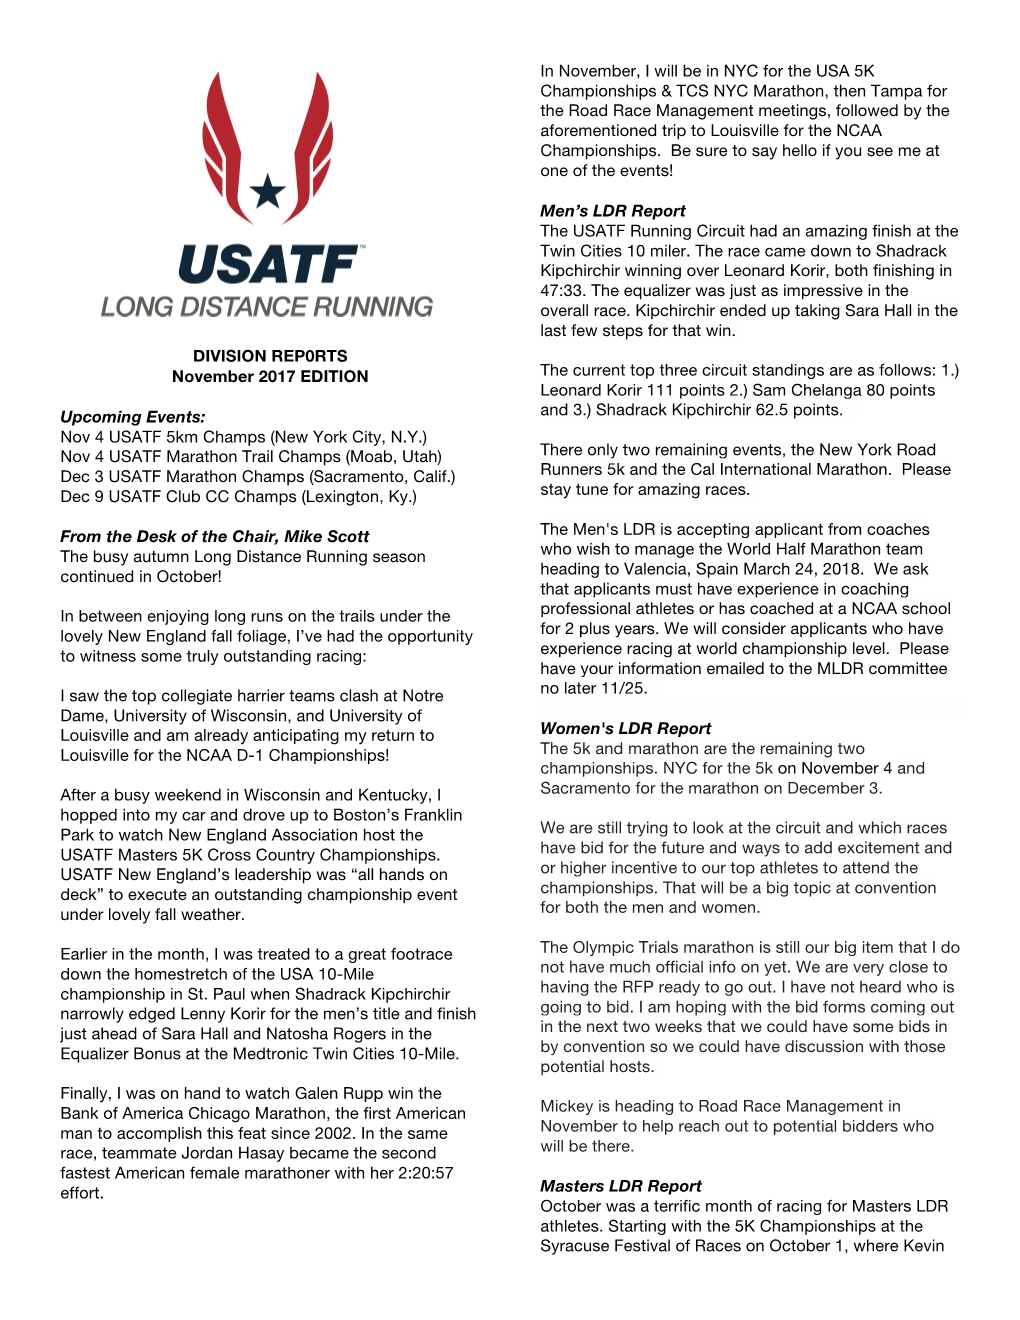 Nov 4 USATF Marathon Trail